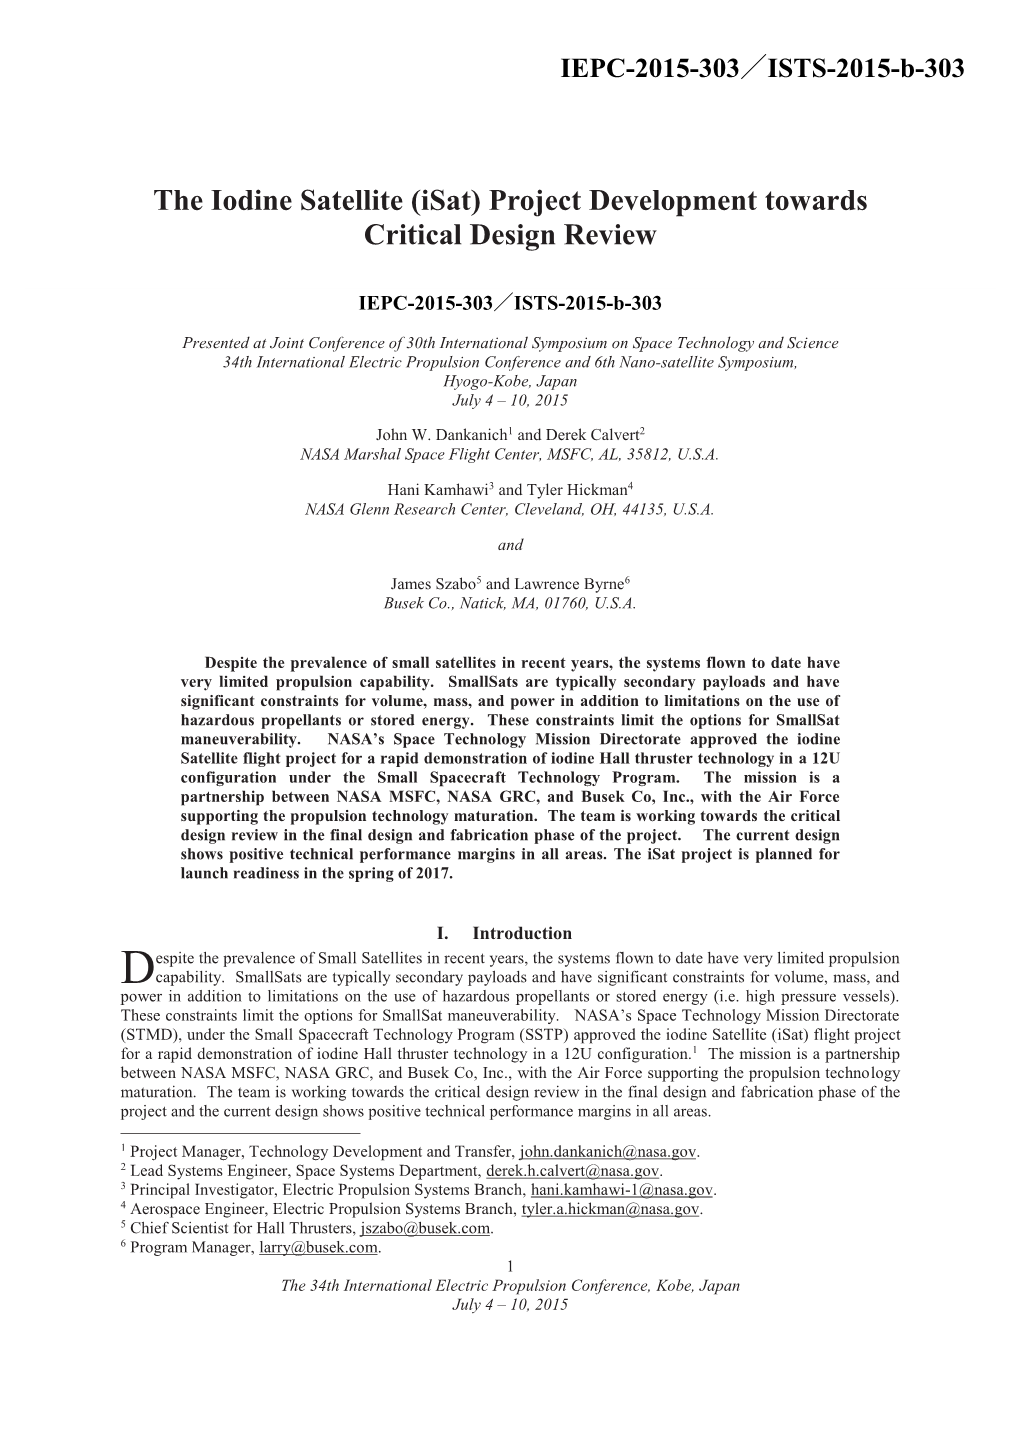 Isat) Project Development Towards Critical Design Review